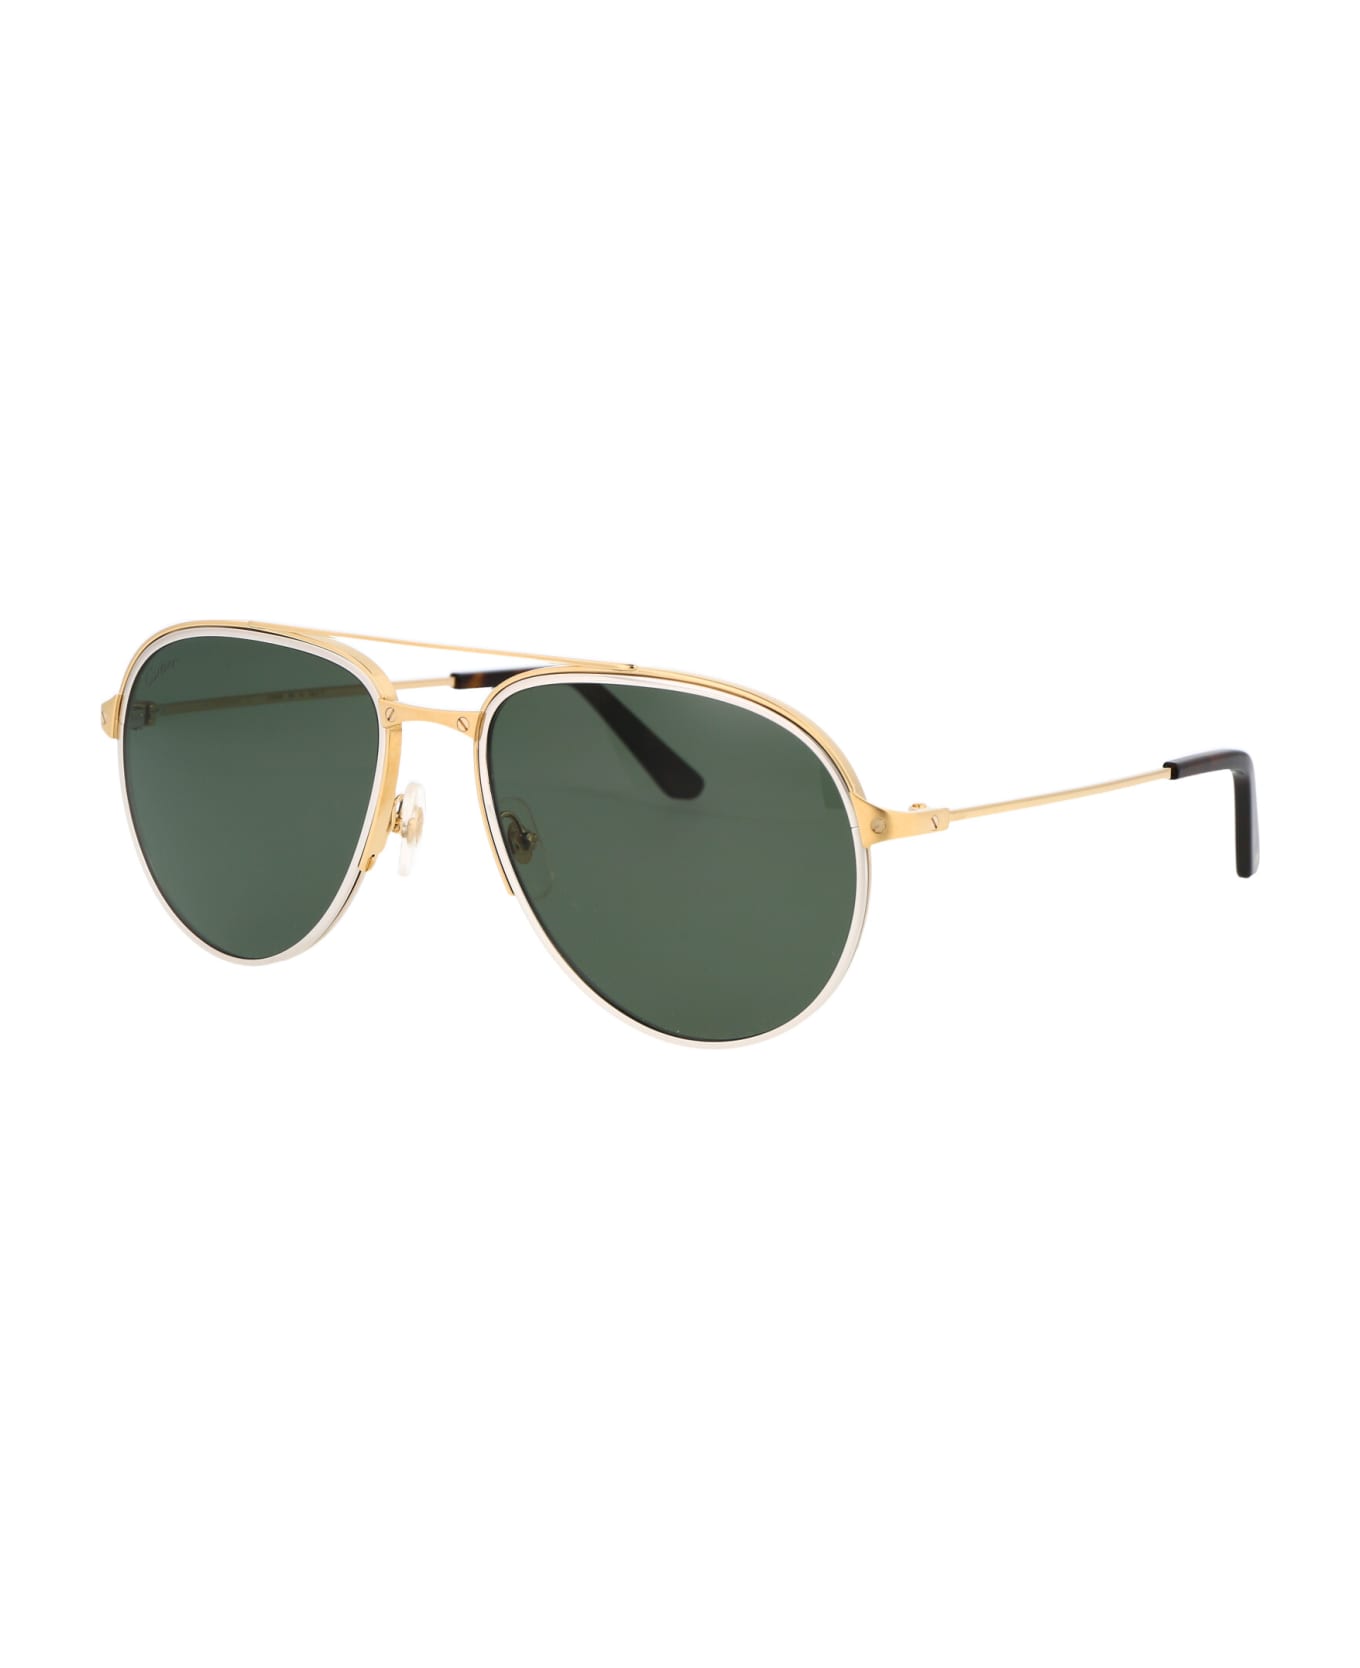 Cartier Eyewear Ct0325s Sunglasses - 006 GOLD GOLD GREEN サングラス